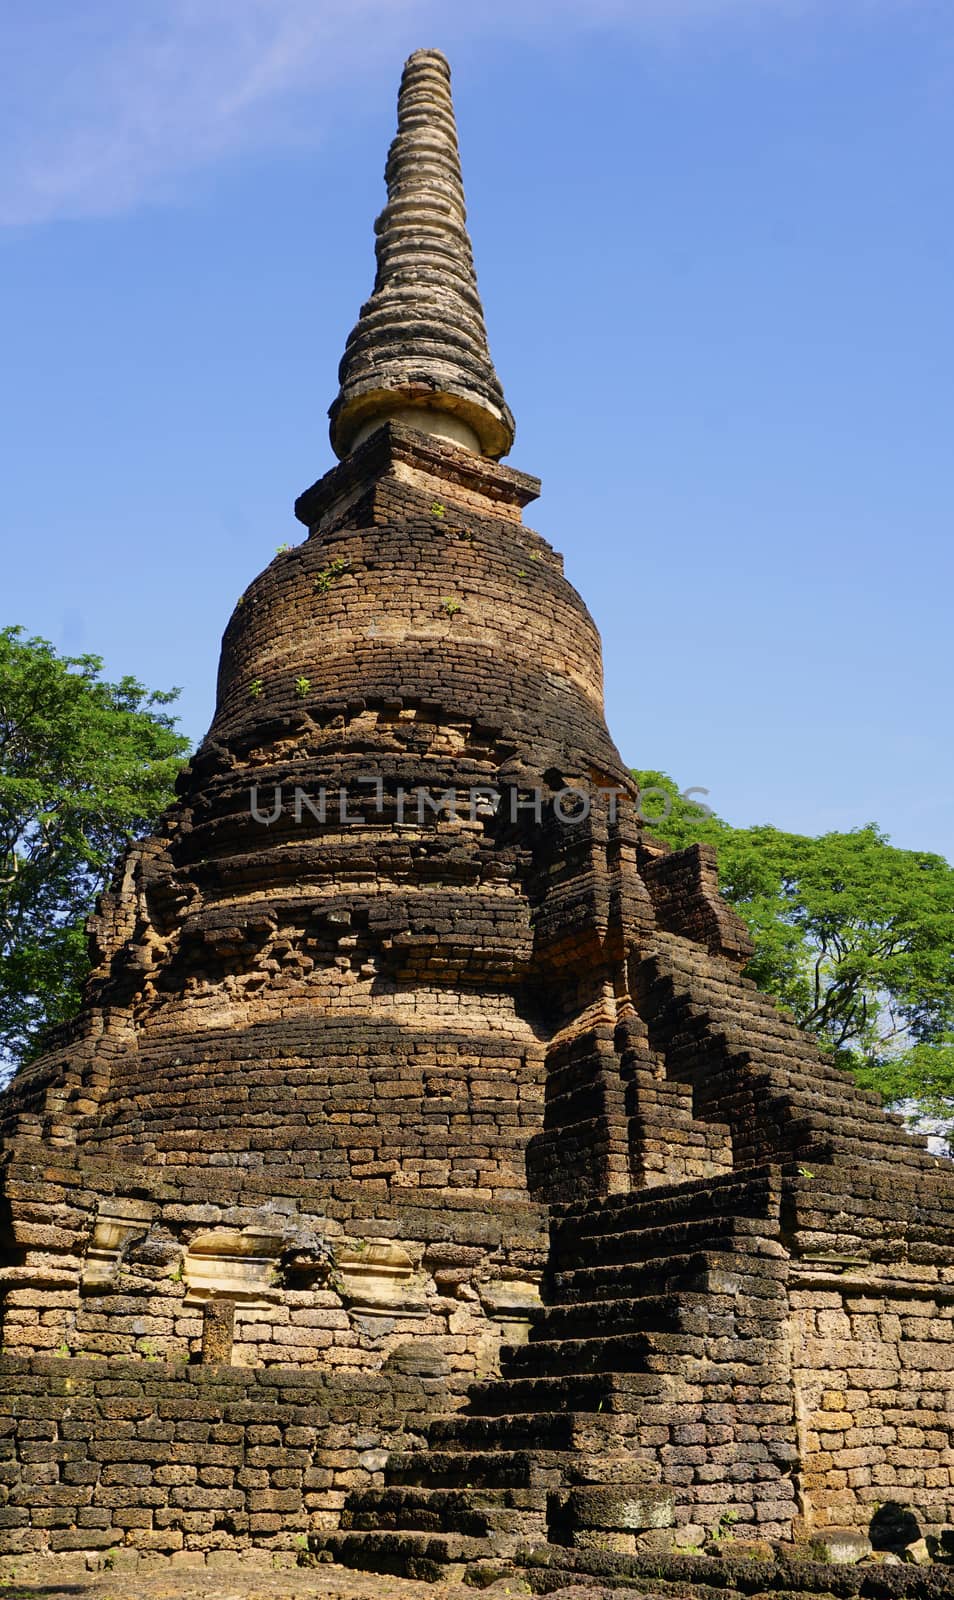 Historical Pagoda Wat Nang phaya temple architecture by polarbearstudio